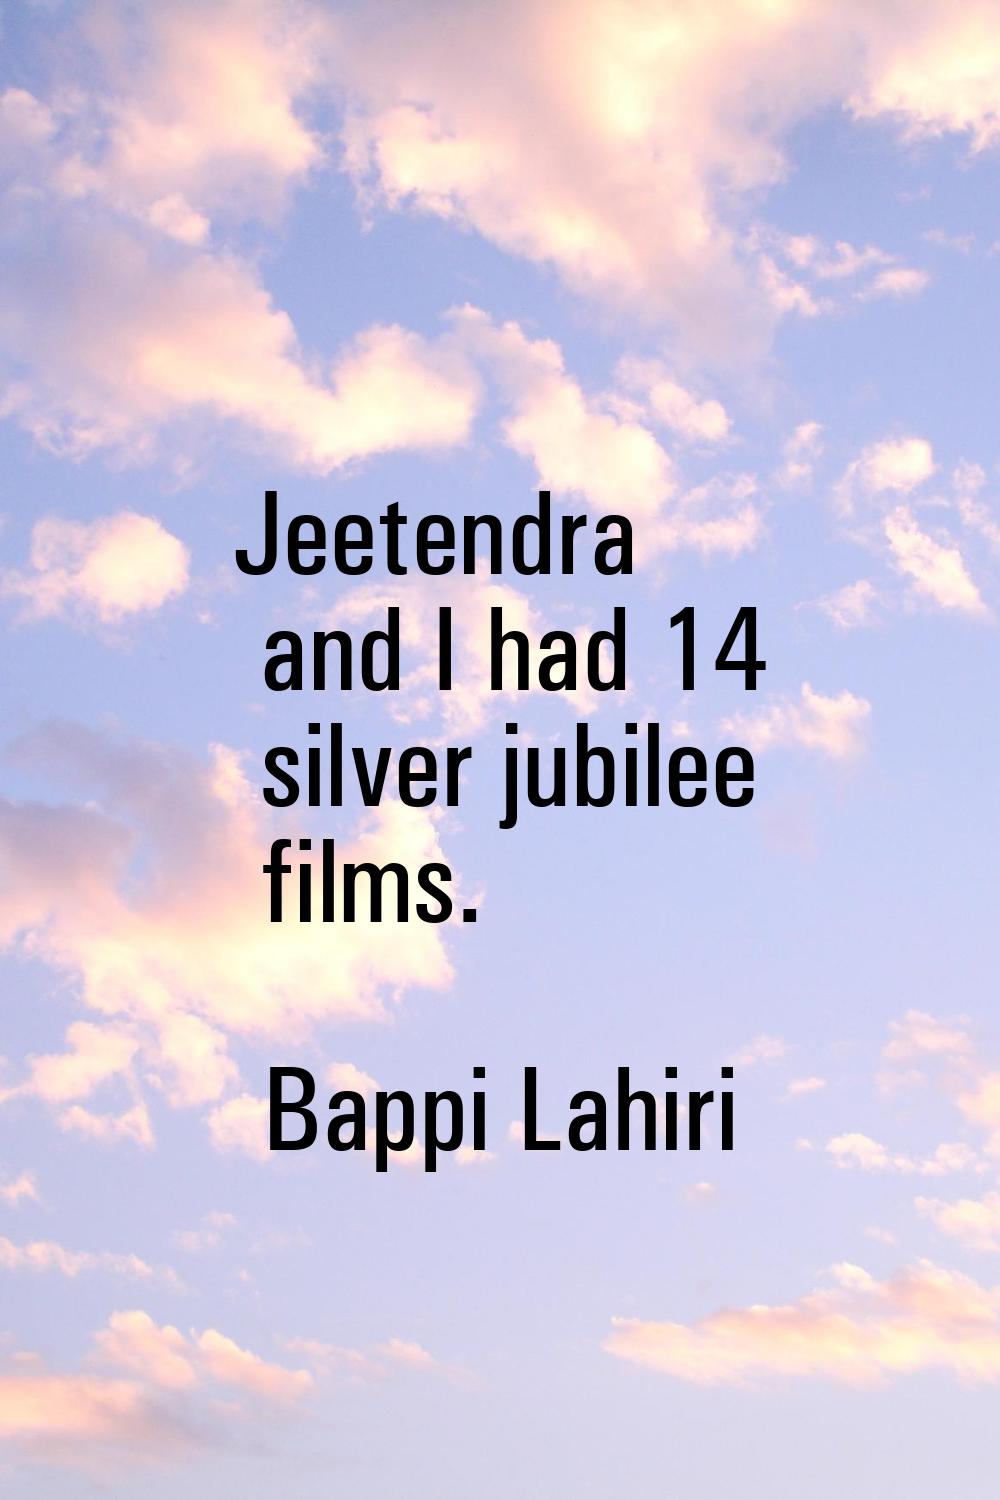 Jeetendra and I had 14 silver jubilee films.